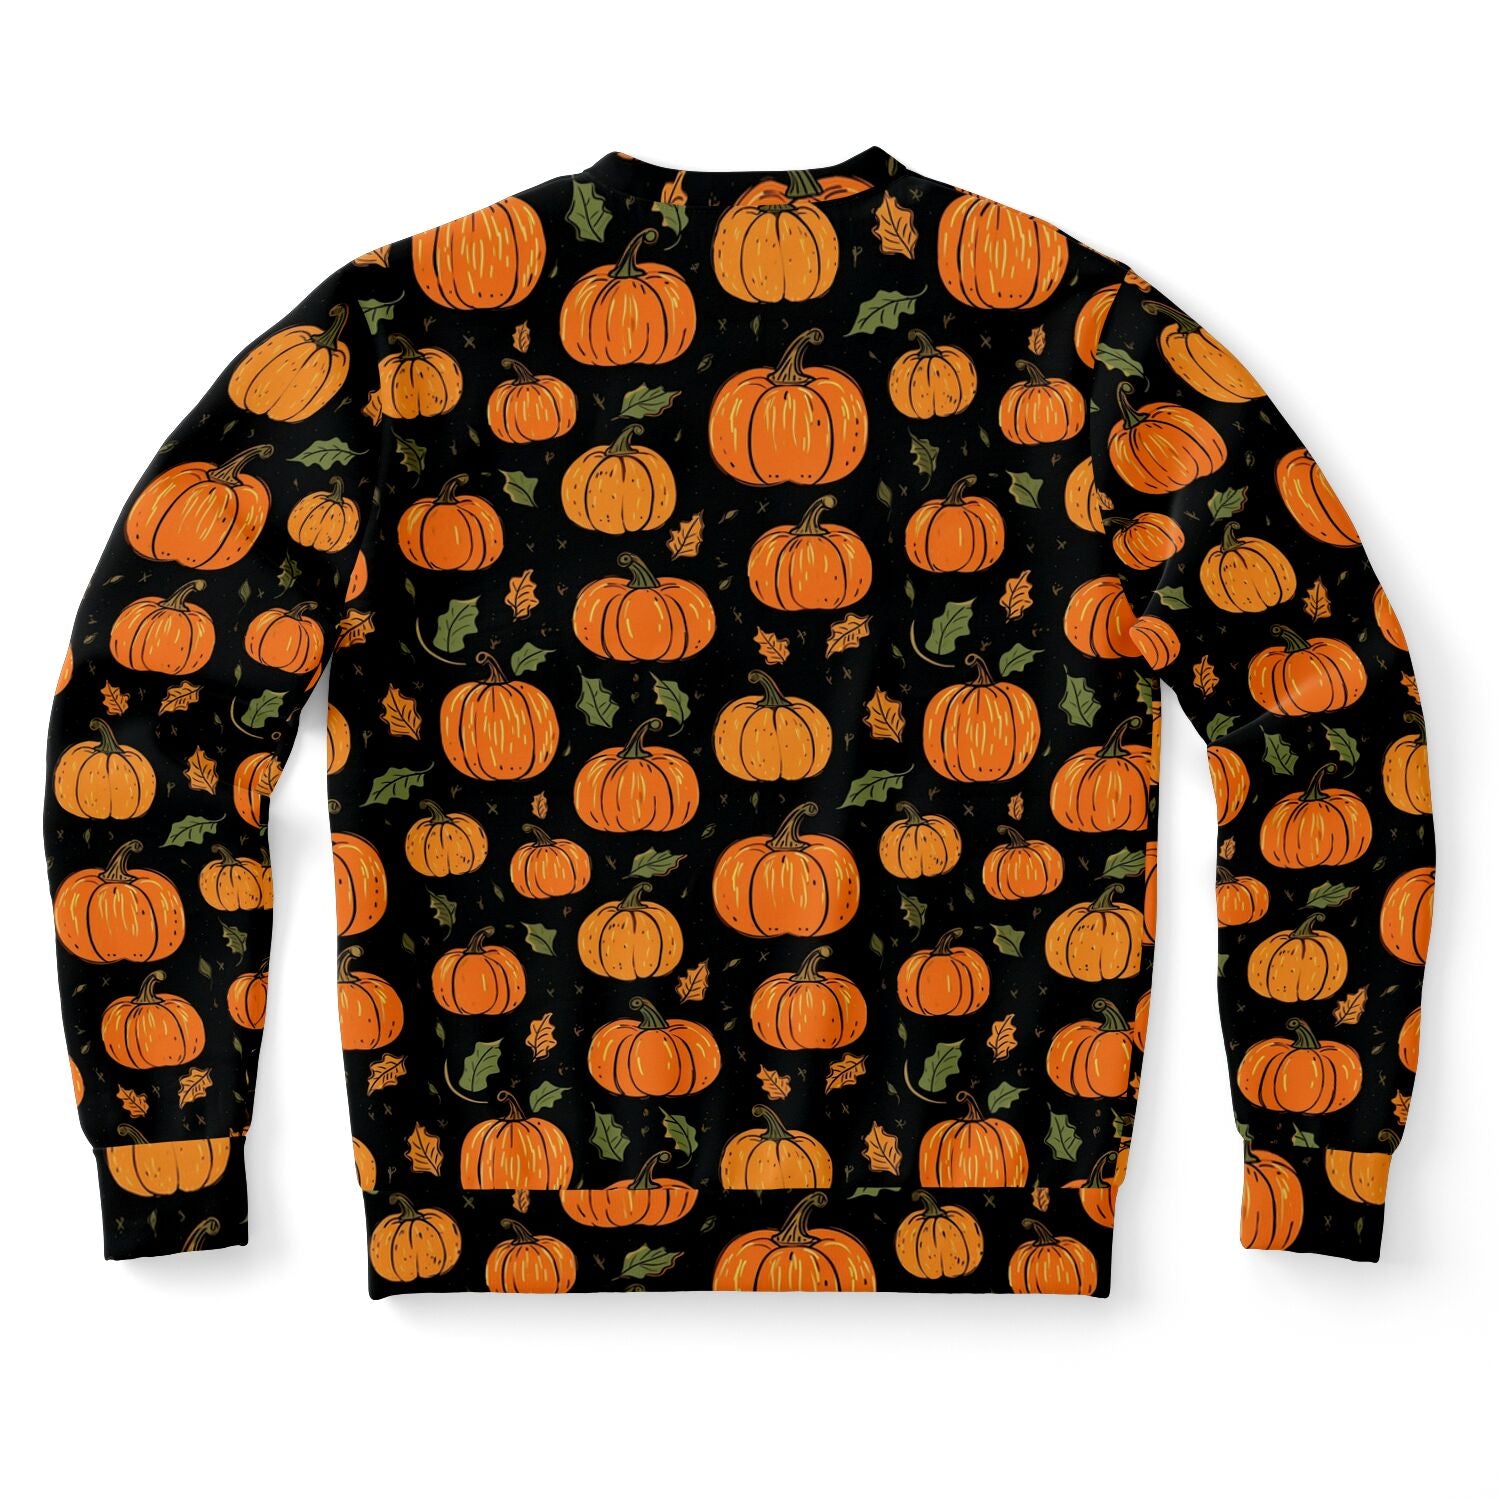 Pumpkins Sweatshirt, Fall Autumn Leaves Halloween Graphic Crewneck Cotton Sweater Jumper Pullover Men Women Adult Aesthetic Designer Top Starcove Fashion